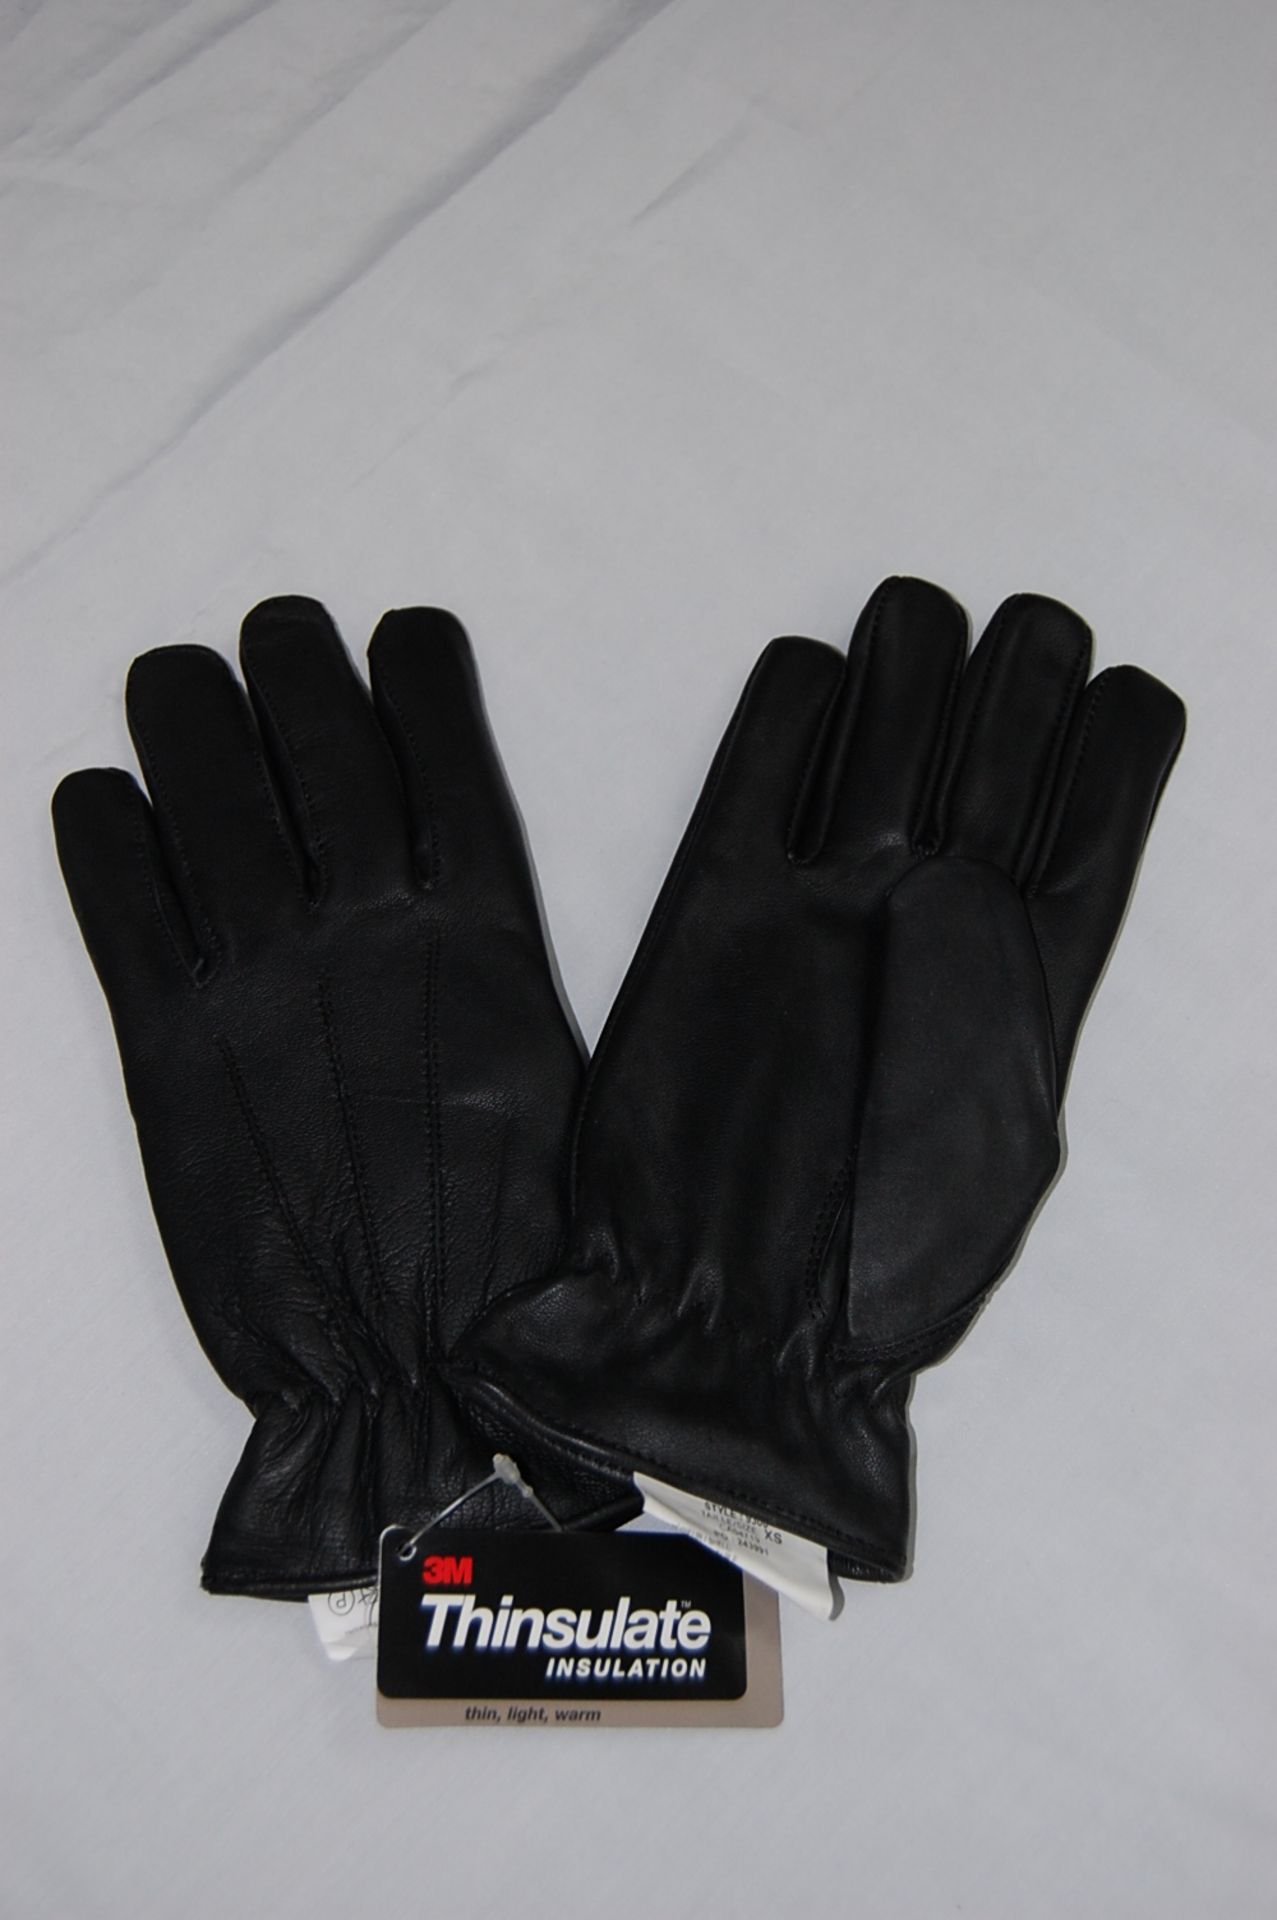 Lot 50 Lambskin Patrol Gloves w/Thinsulate Lining 2XL